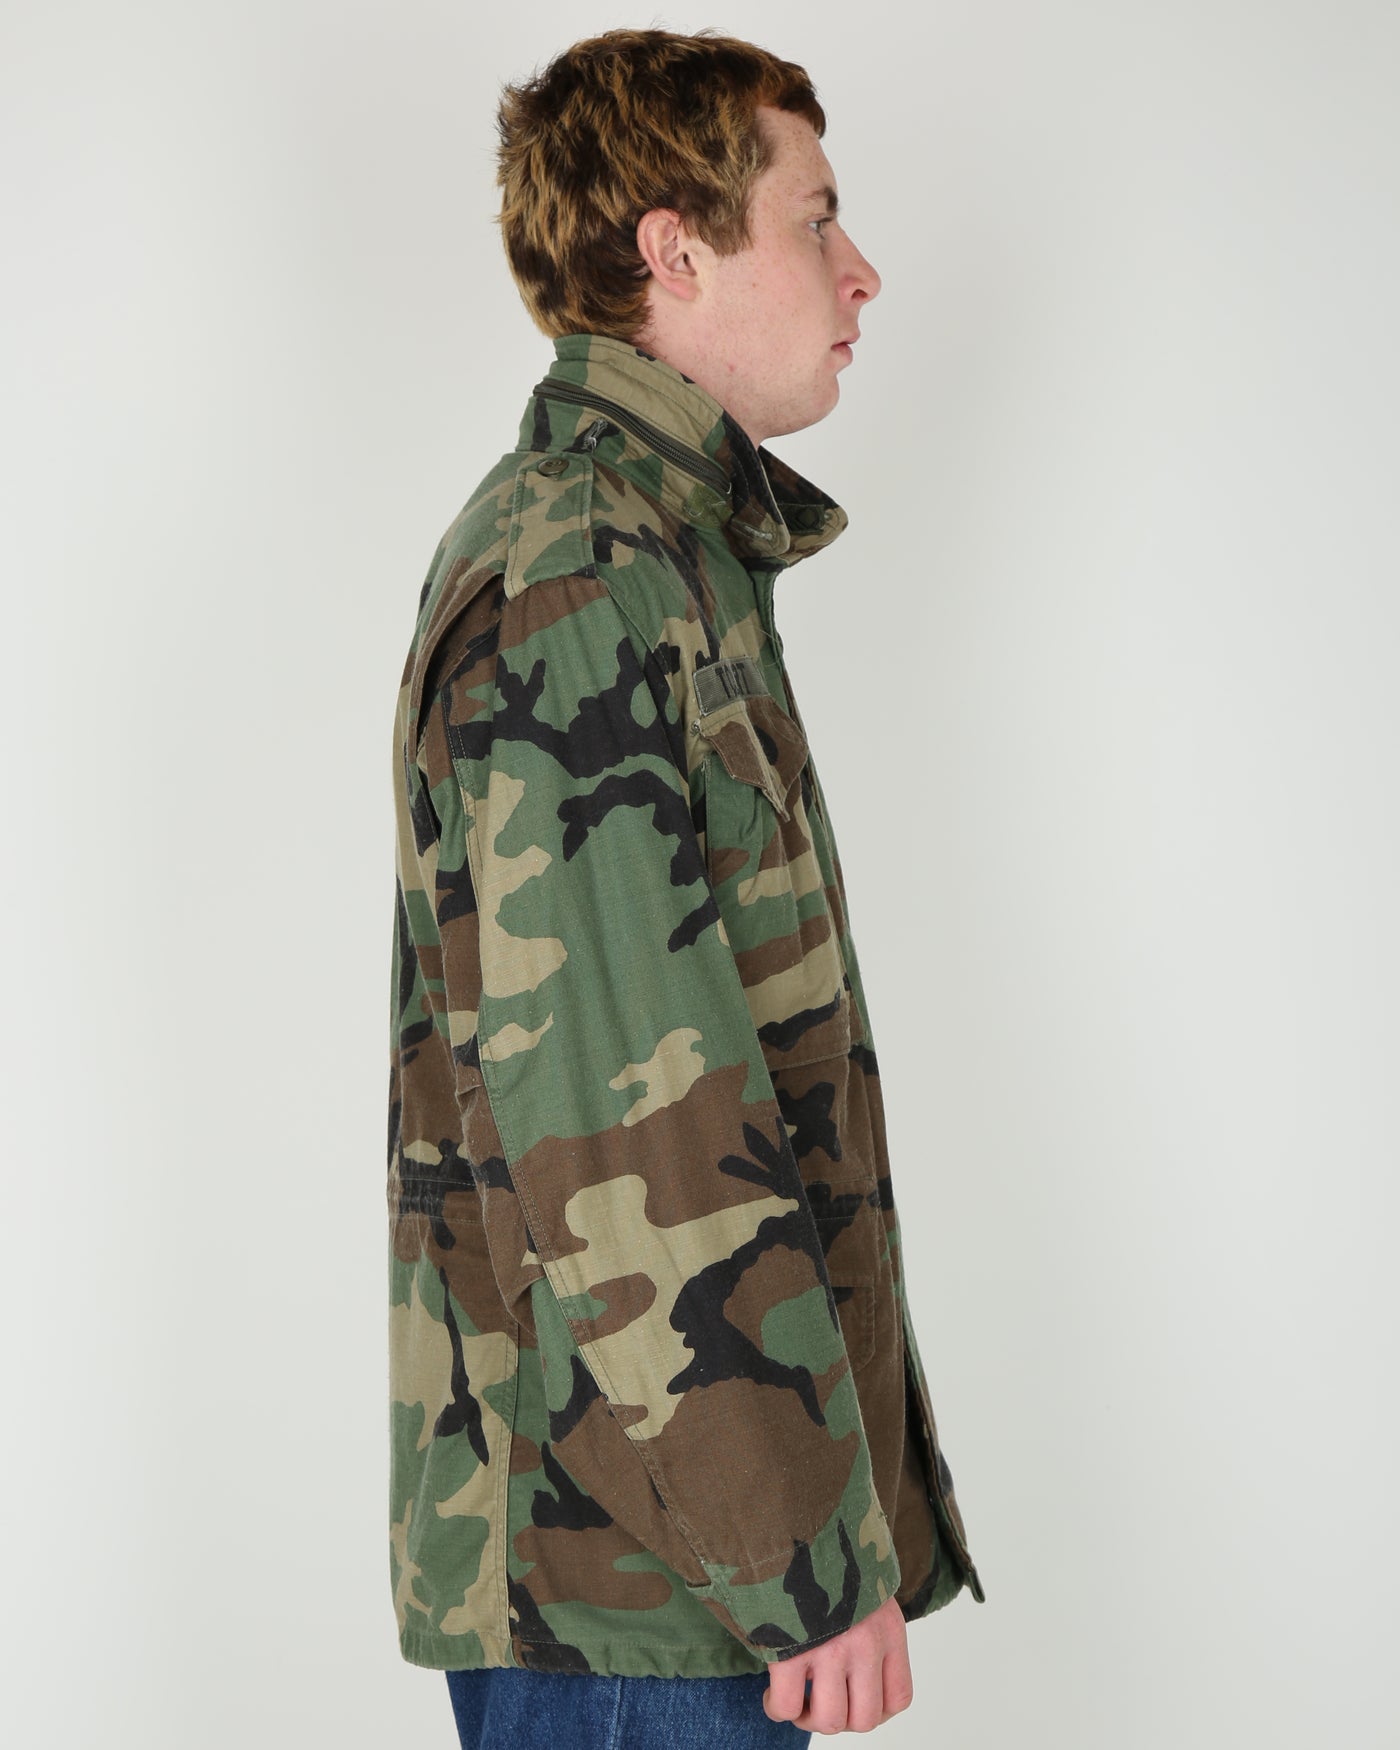 1991 Vintage US Army M-81 Woodland Camouflage M65 Field Jacket - Small / Regular